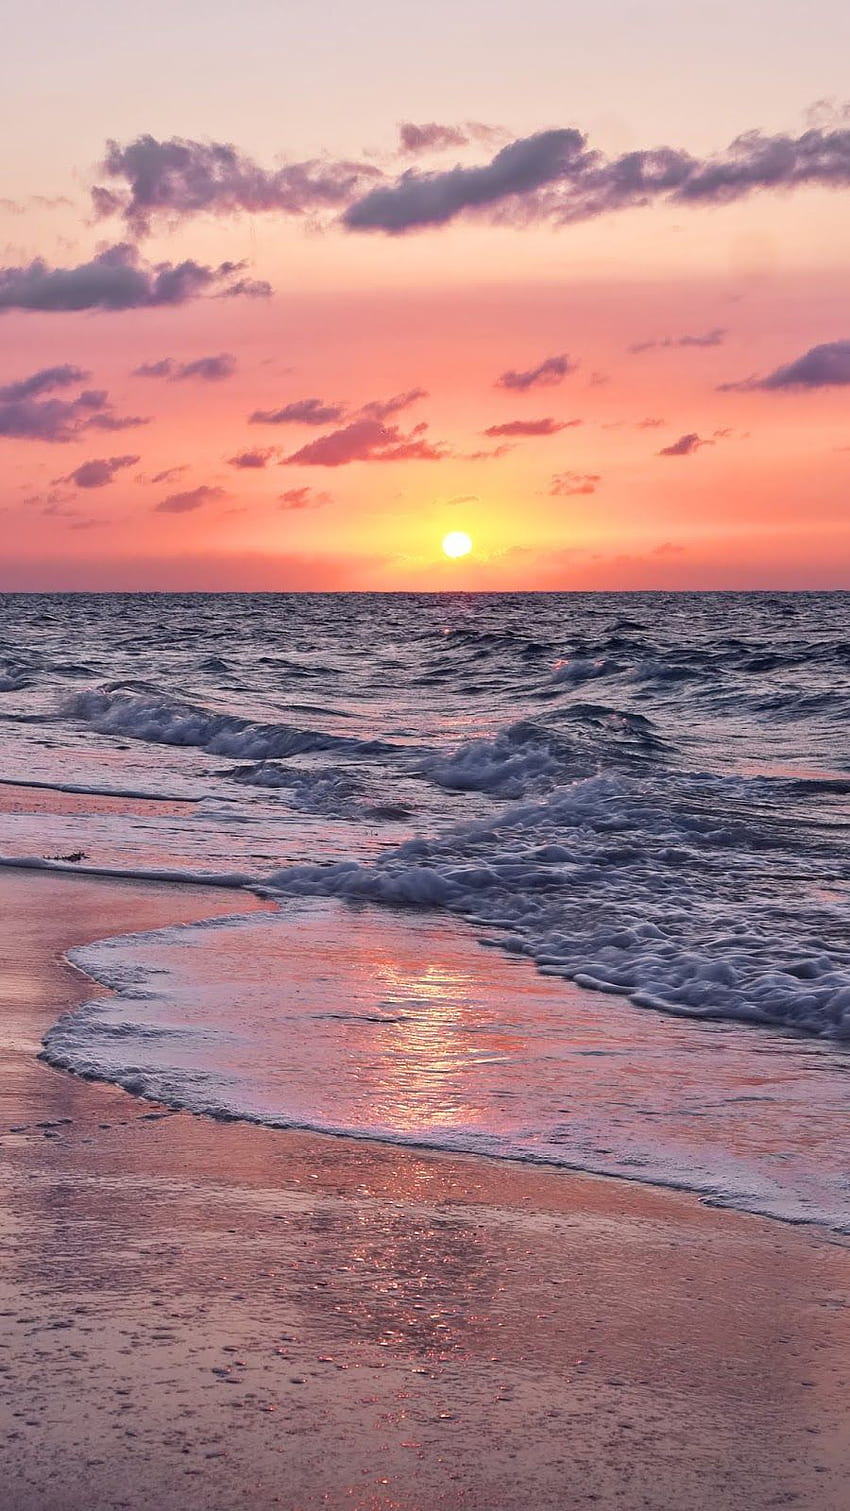 720P Free download | My Favorite : Stunning sunset sky. Beach sunset ...